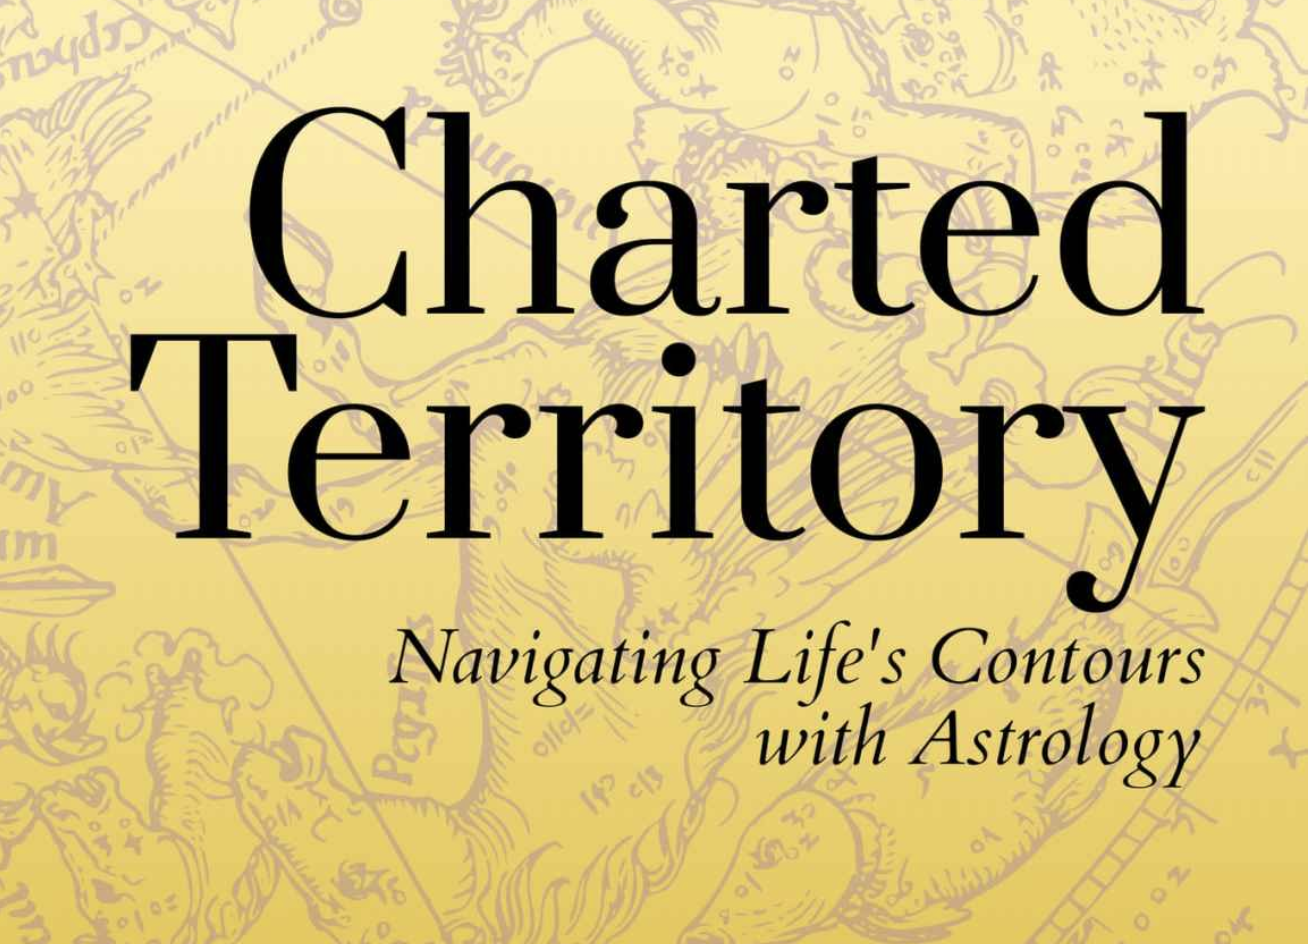 Charted Territory book